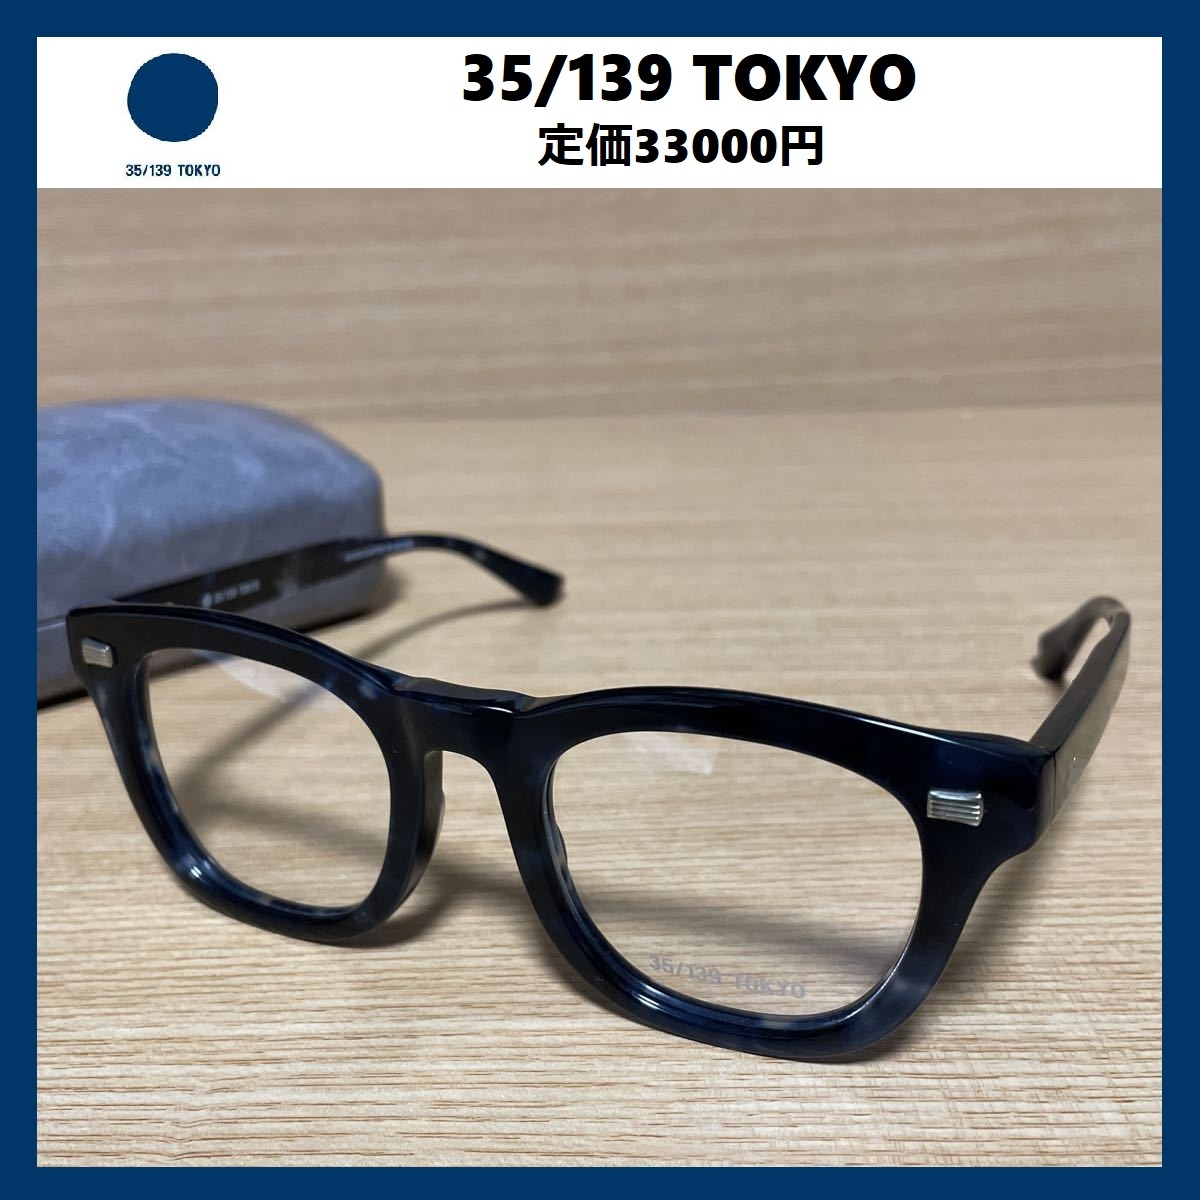 35/139 TOKYO 眼鏡 111-0004 SUMI - 小物